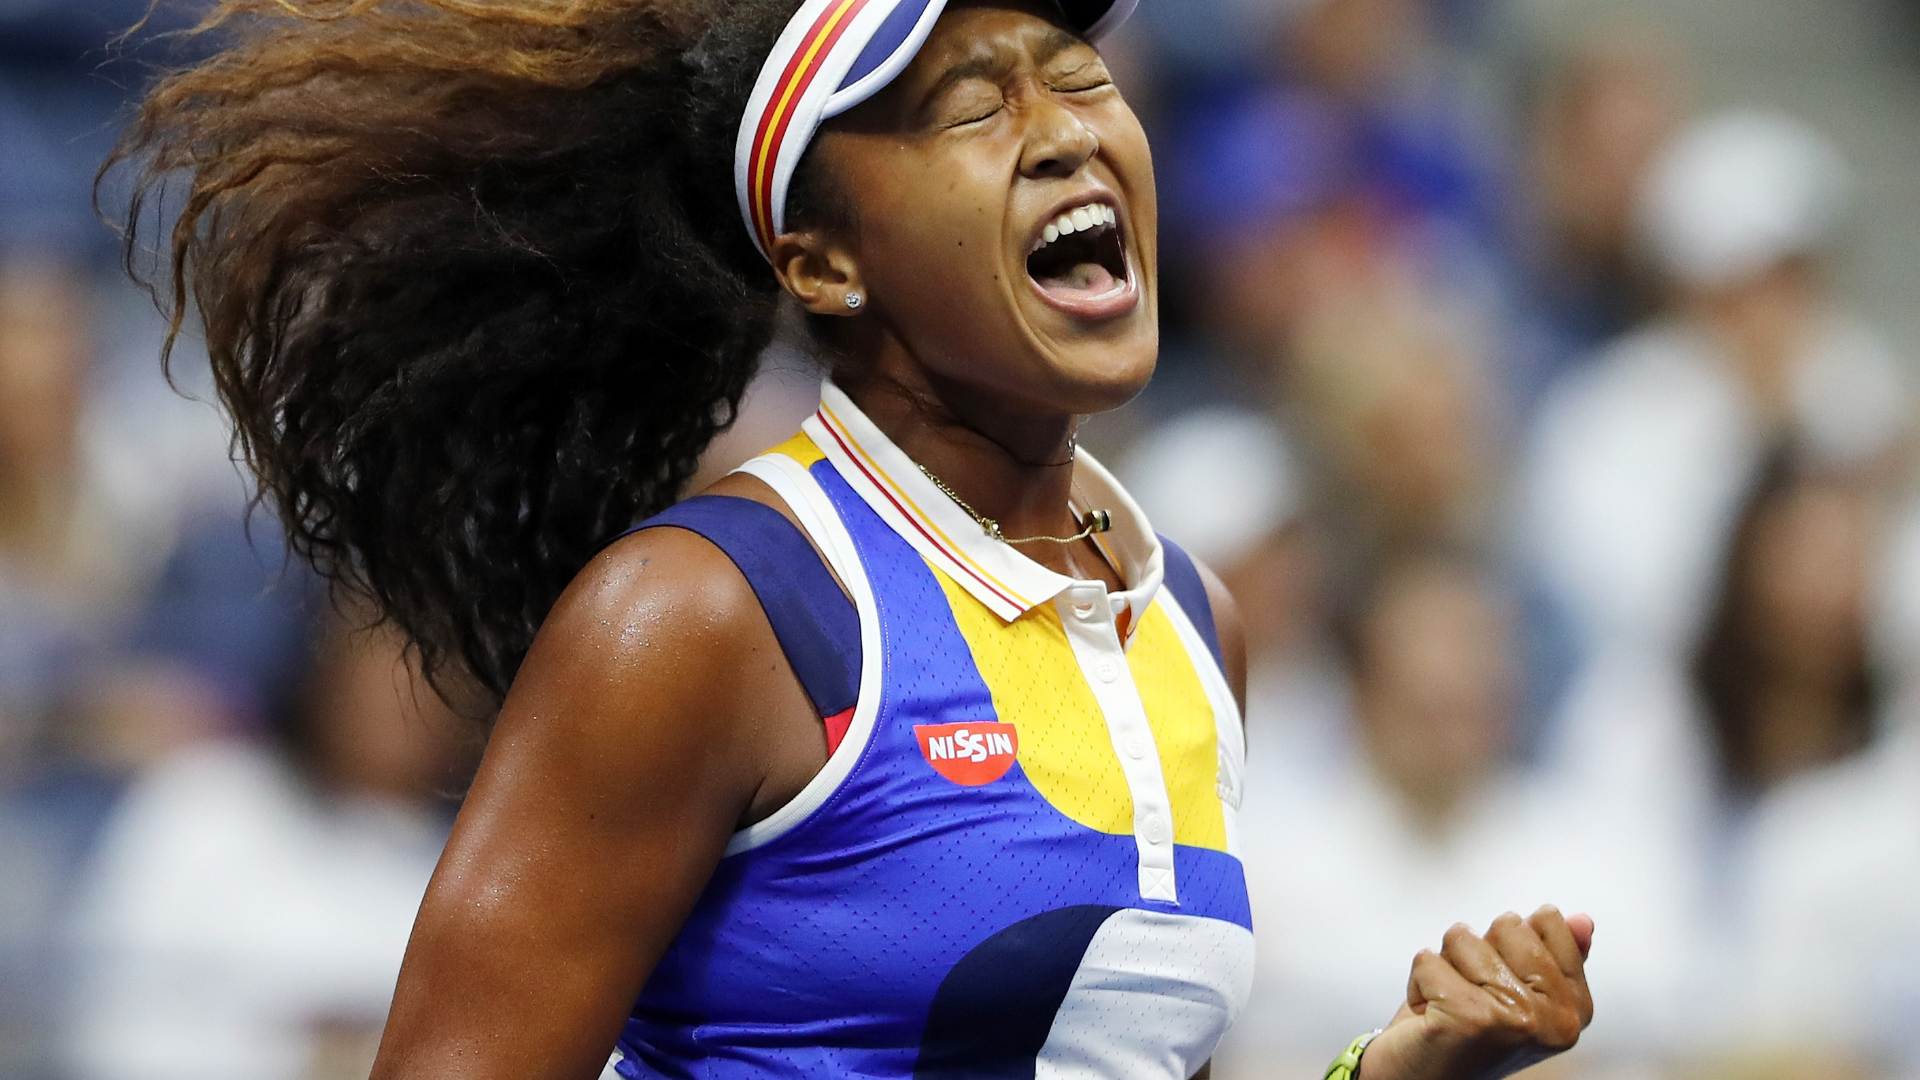 VIDEO: Naomi Osaka Saves Butterfly Mid-Match at the Australian Open